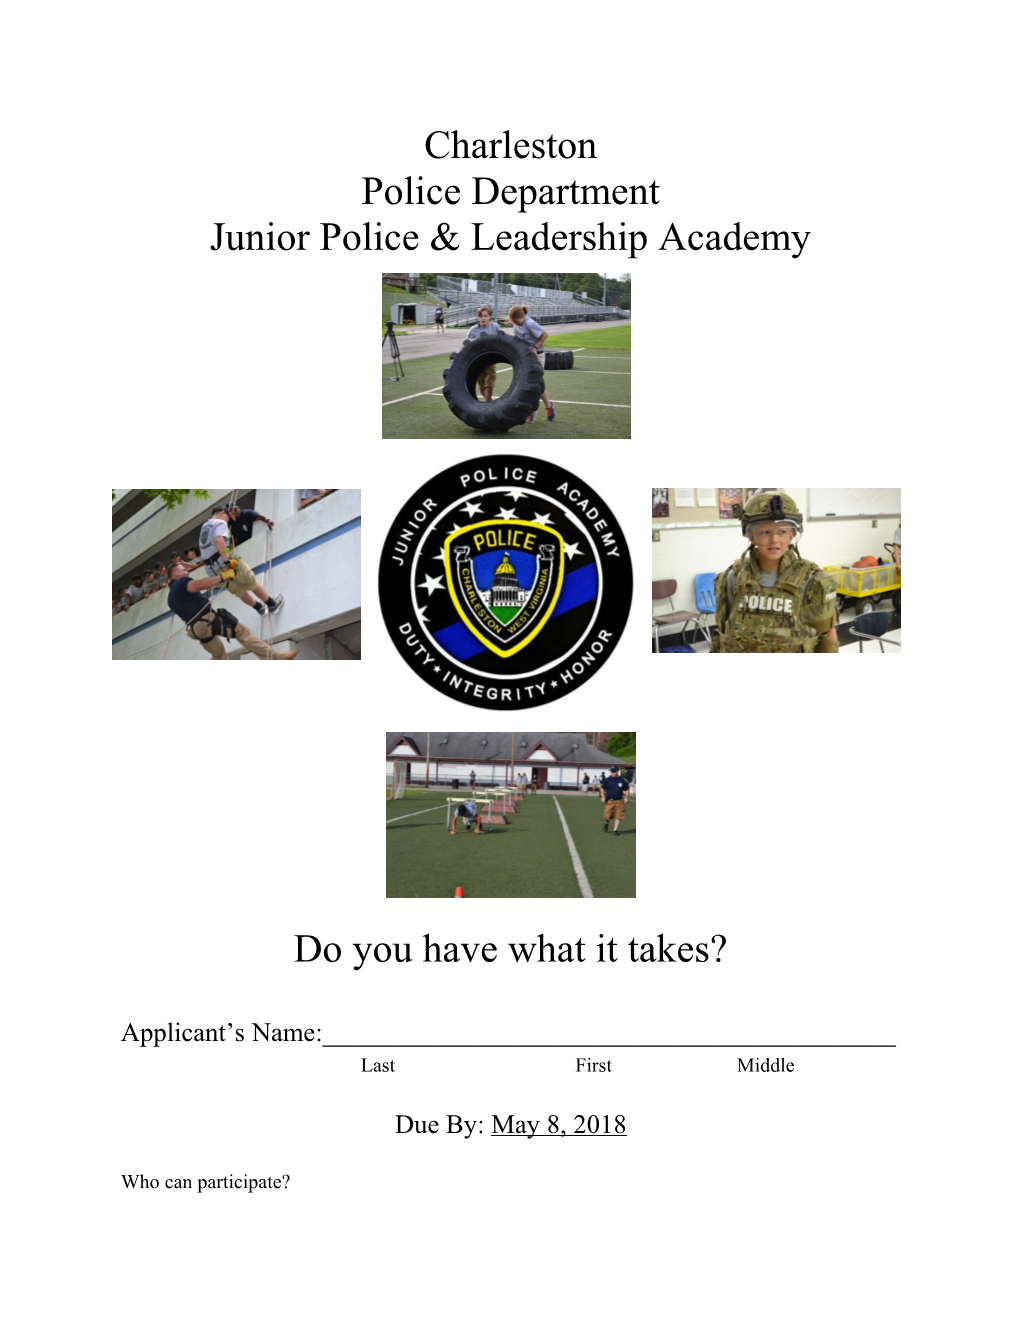 Junior Police & Leadership Academy